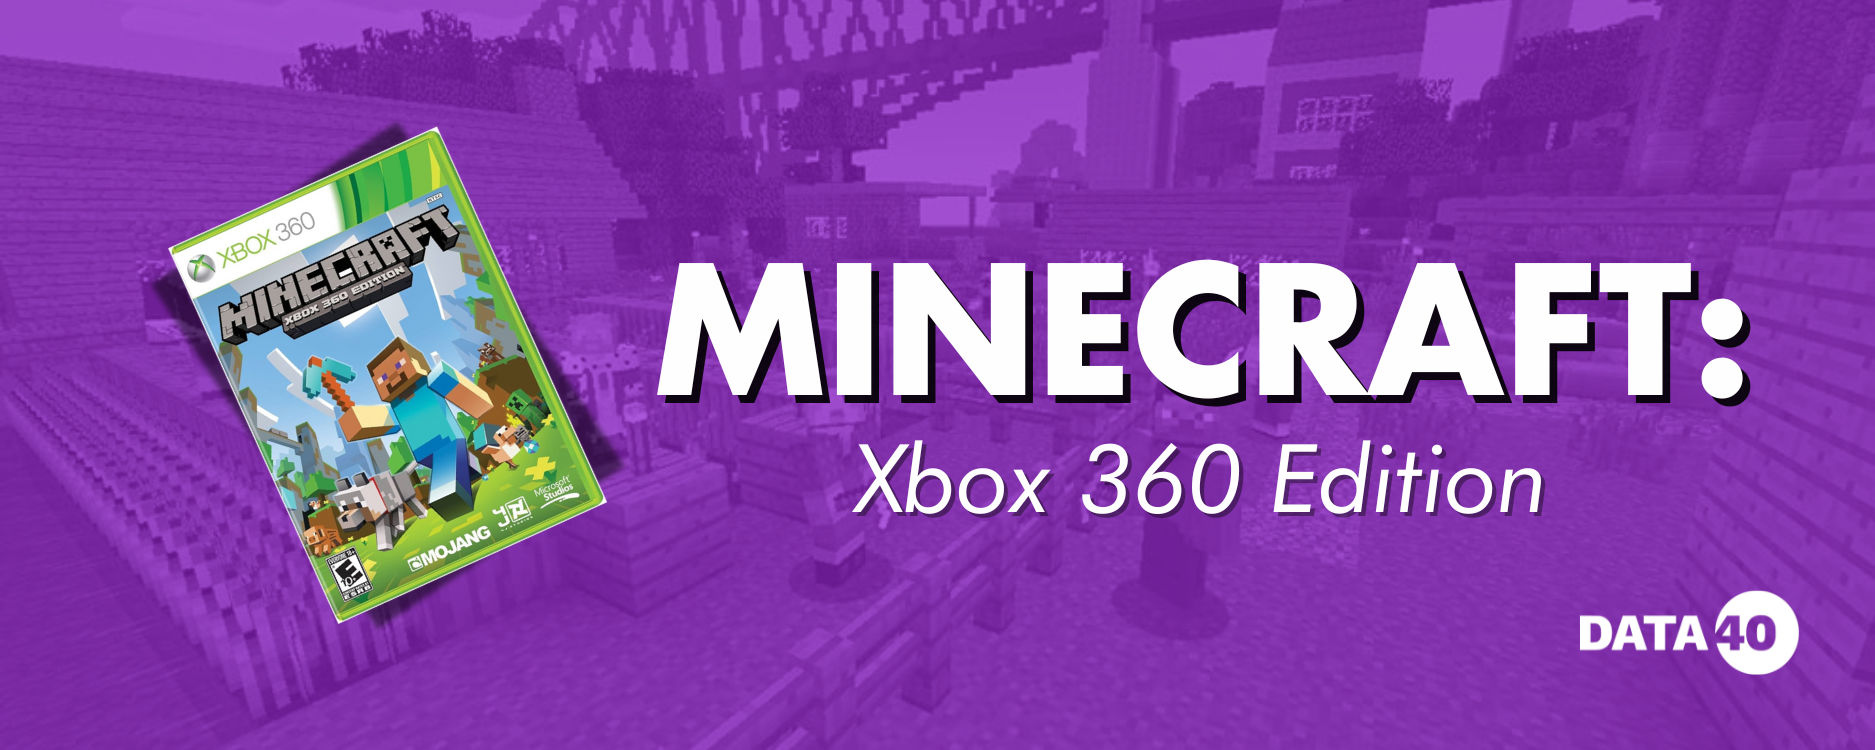 Minecraft_ Xbox 360 Edition